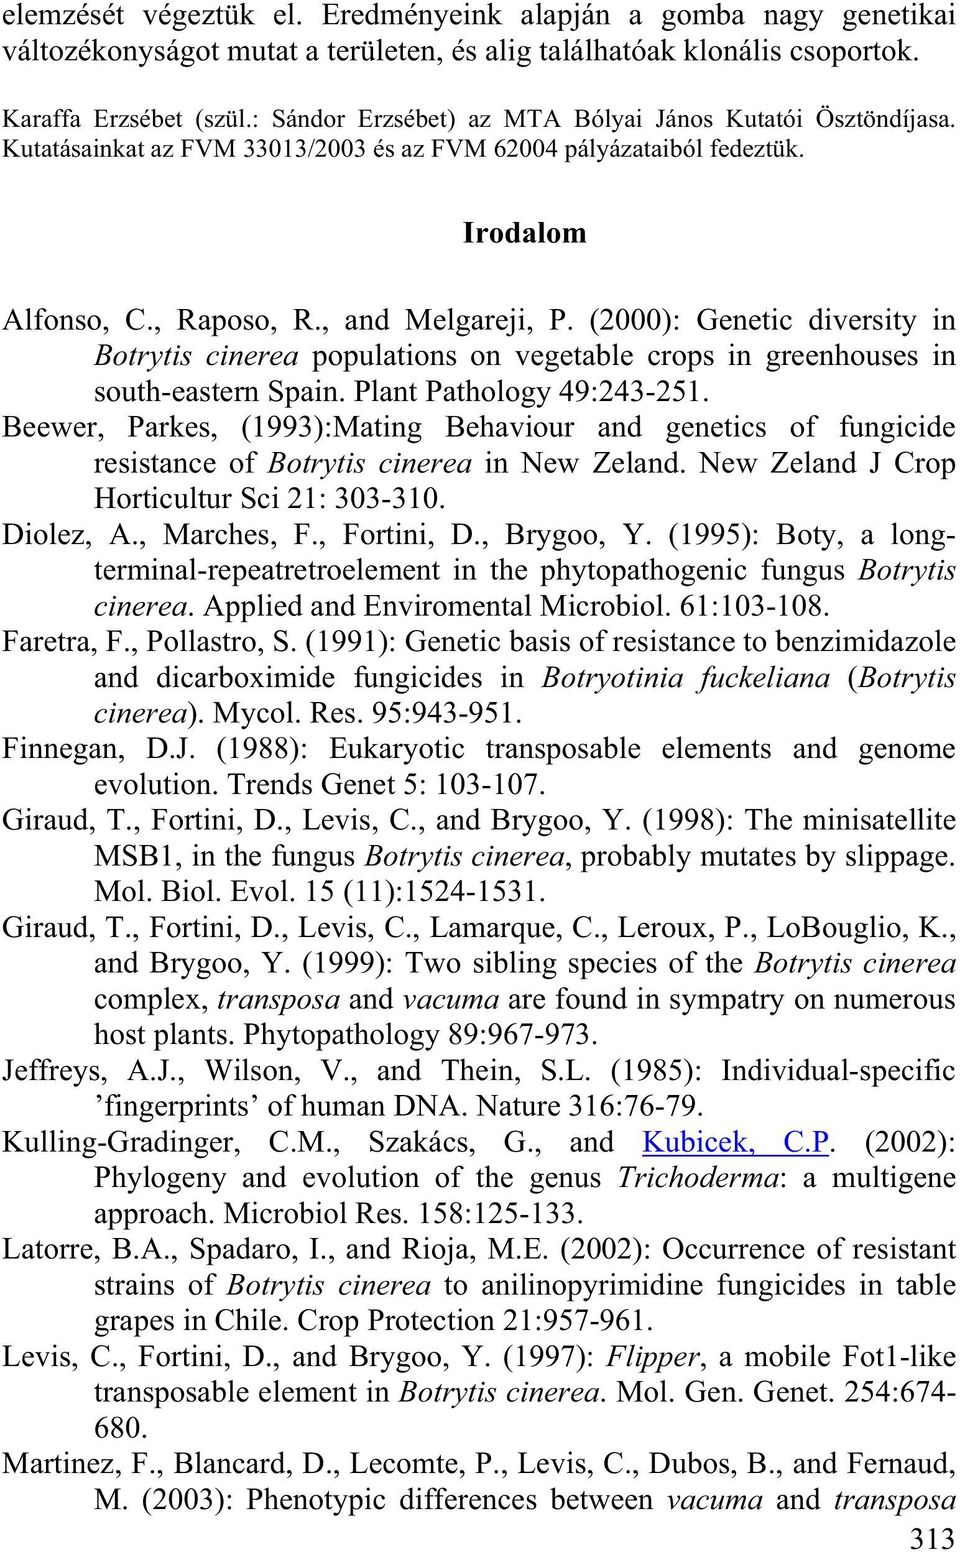 (2000): Genetic diversity in Botrytis cinerea populations on vegetable crops in greenhouses in south-eastern Spain. Plant Pathology 49:243-251.